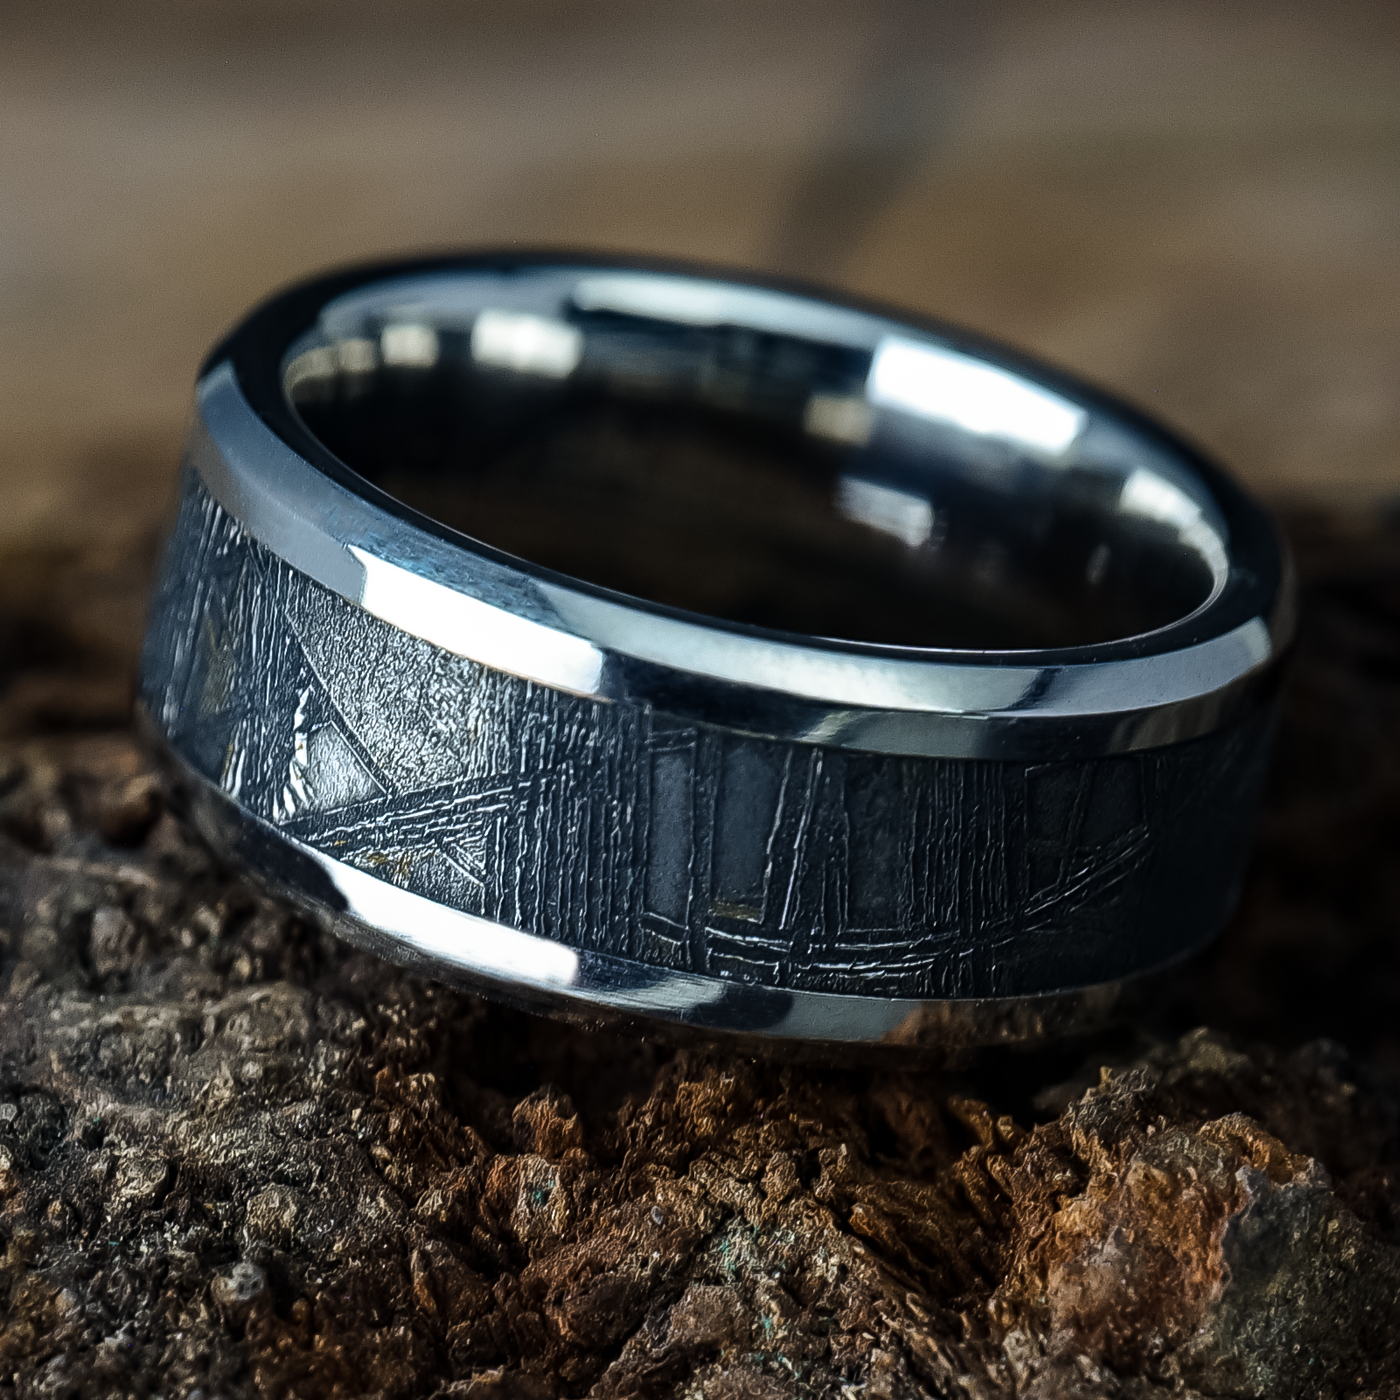 Platinum Ring with Meteorite Inlay - Patrick Adair Designs